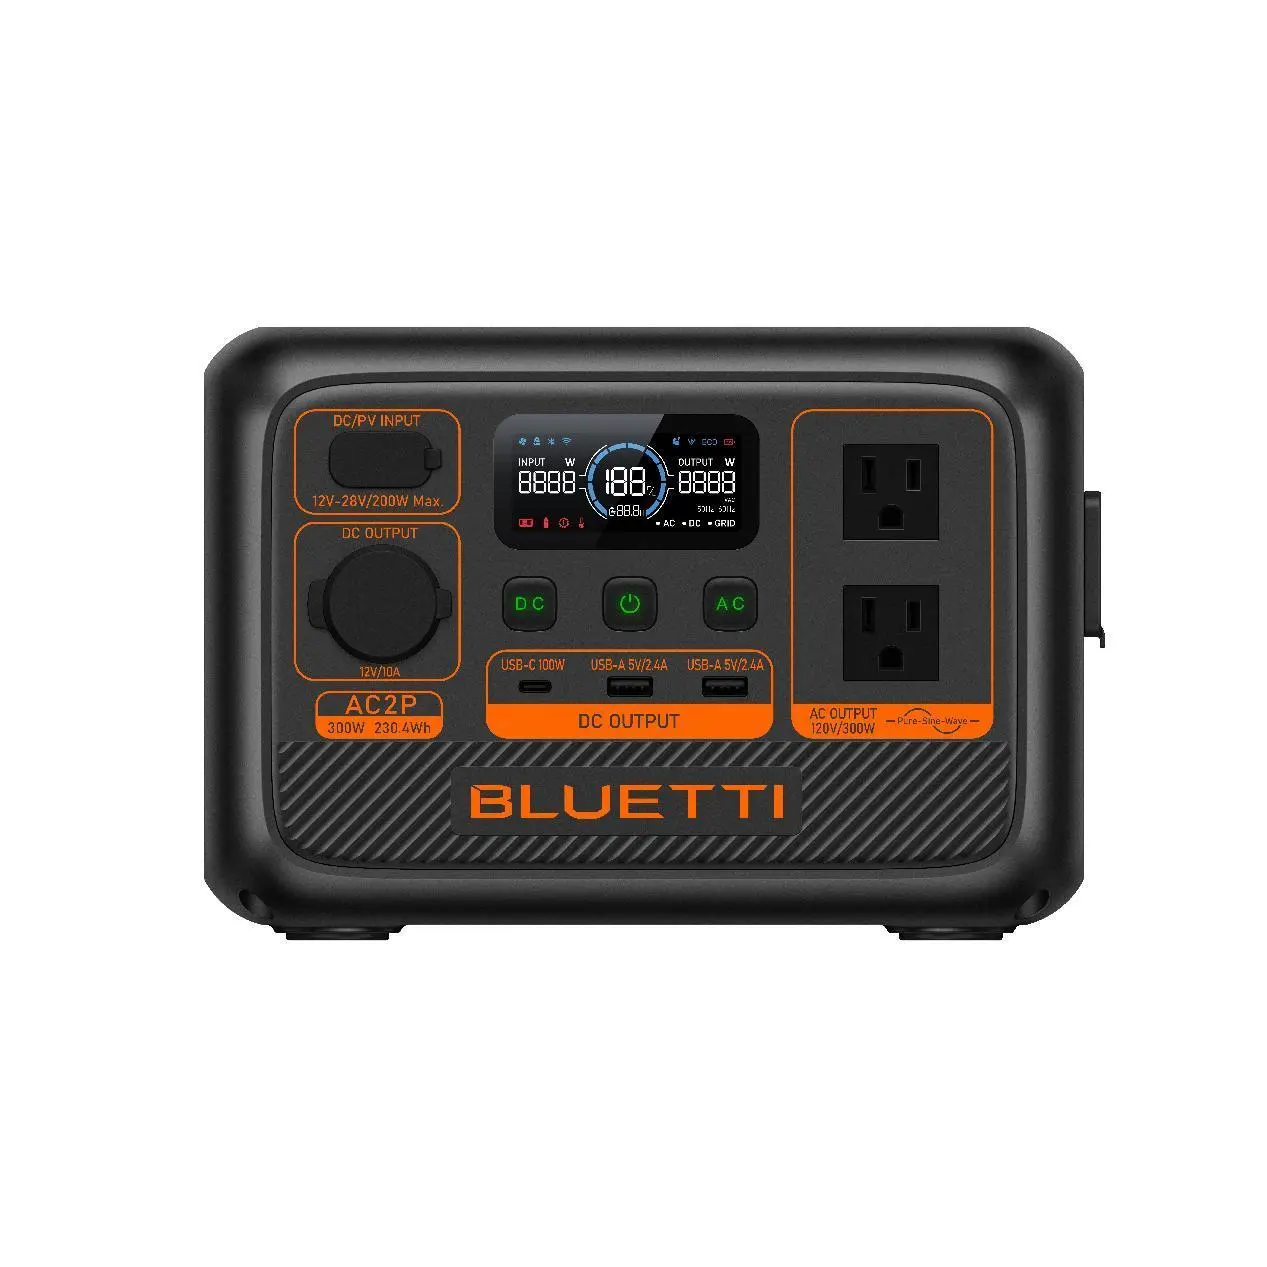 Bluetooth AC2P 300W/230.4 Wh stasiun daya portabel